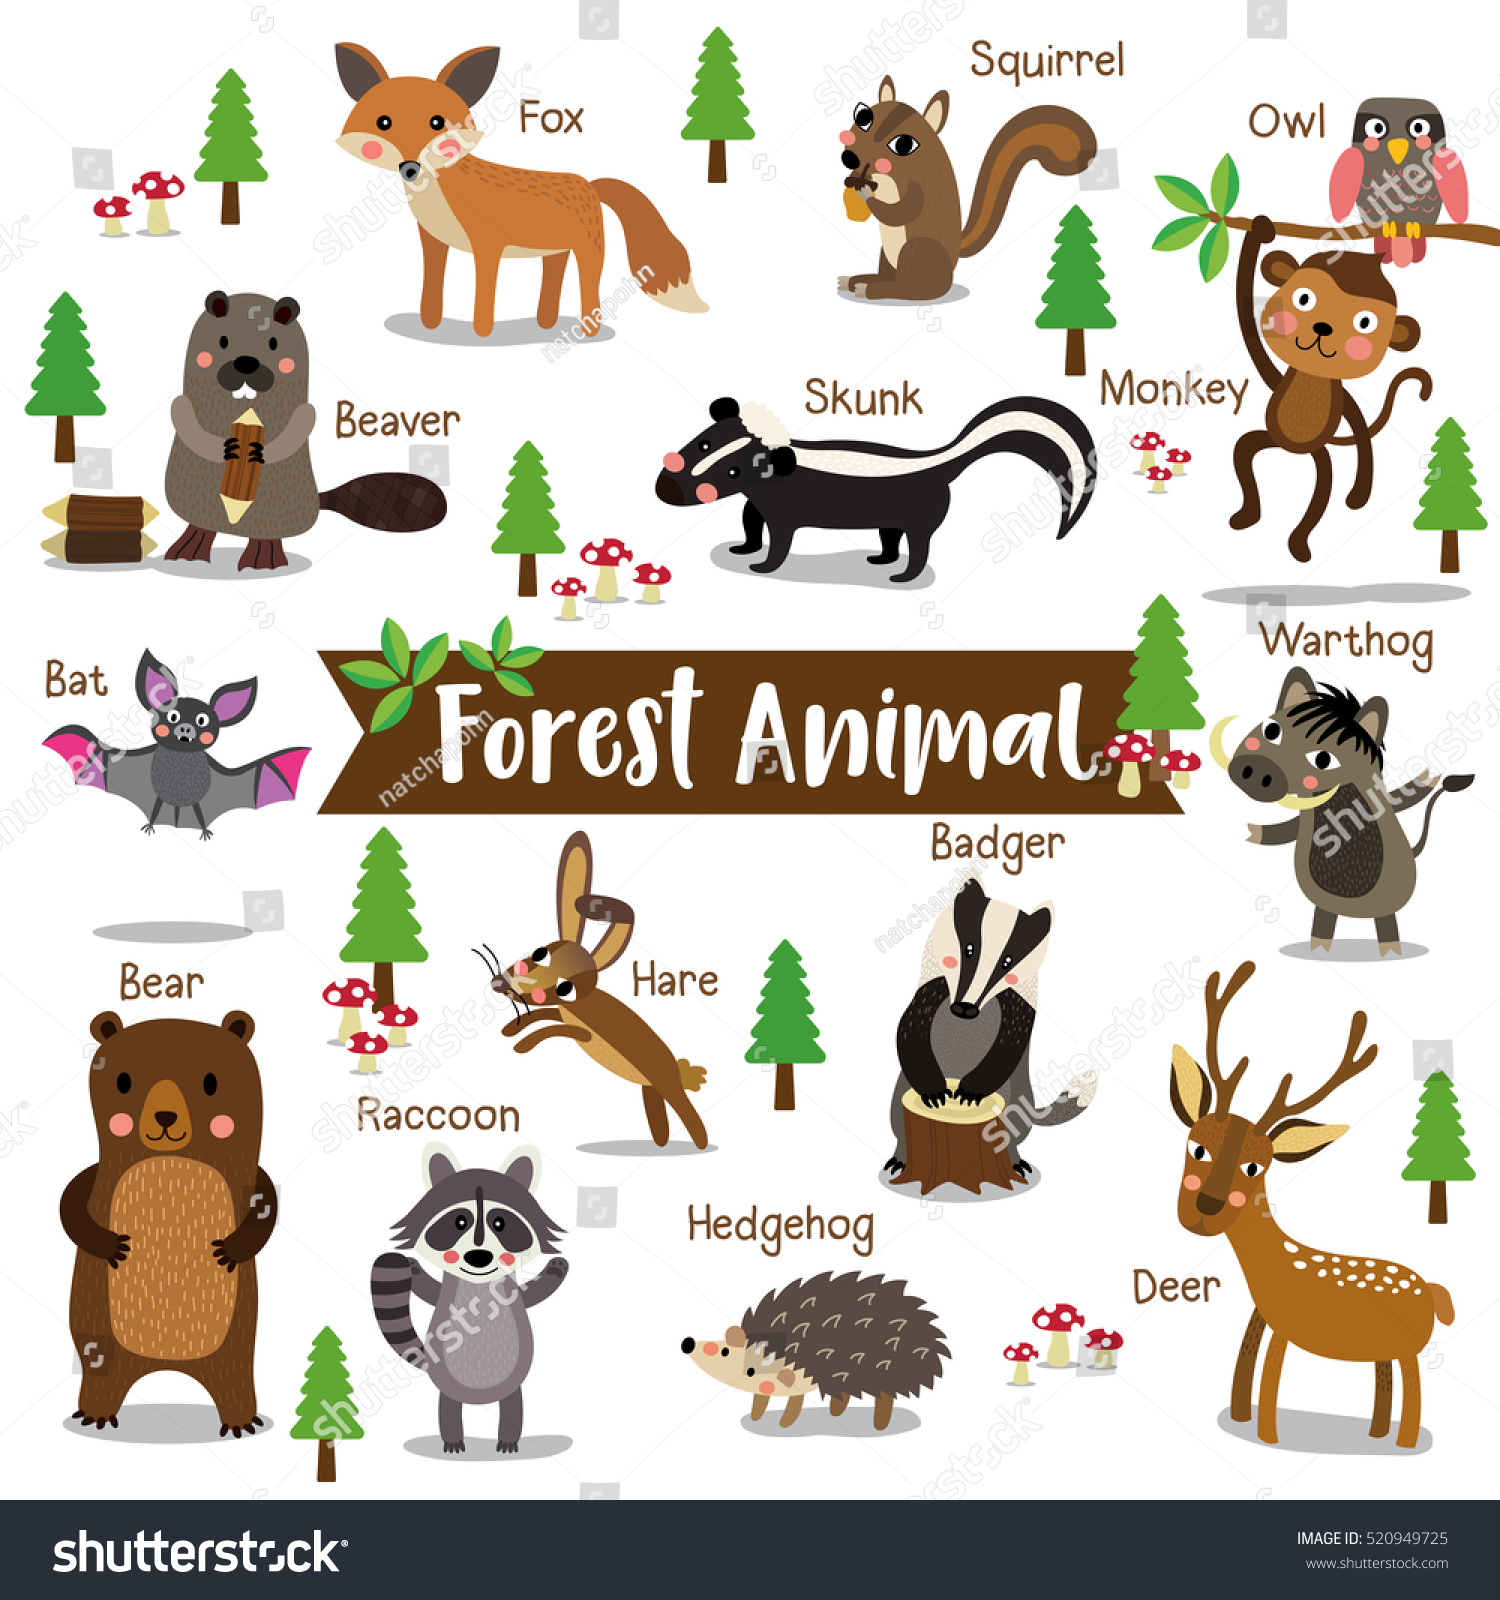 Forest animals Vocabulary